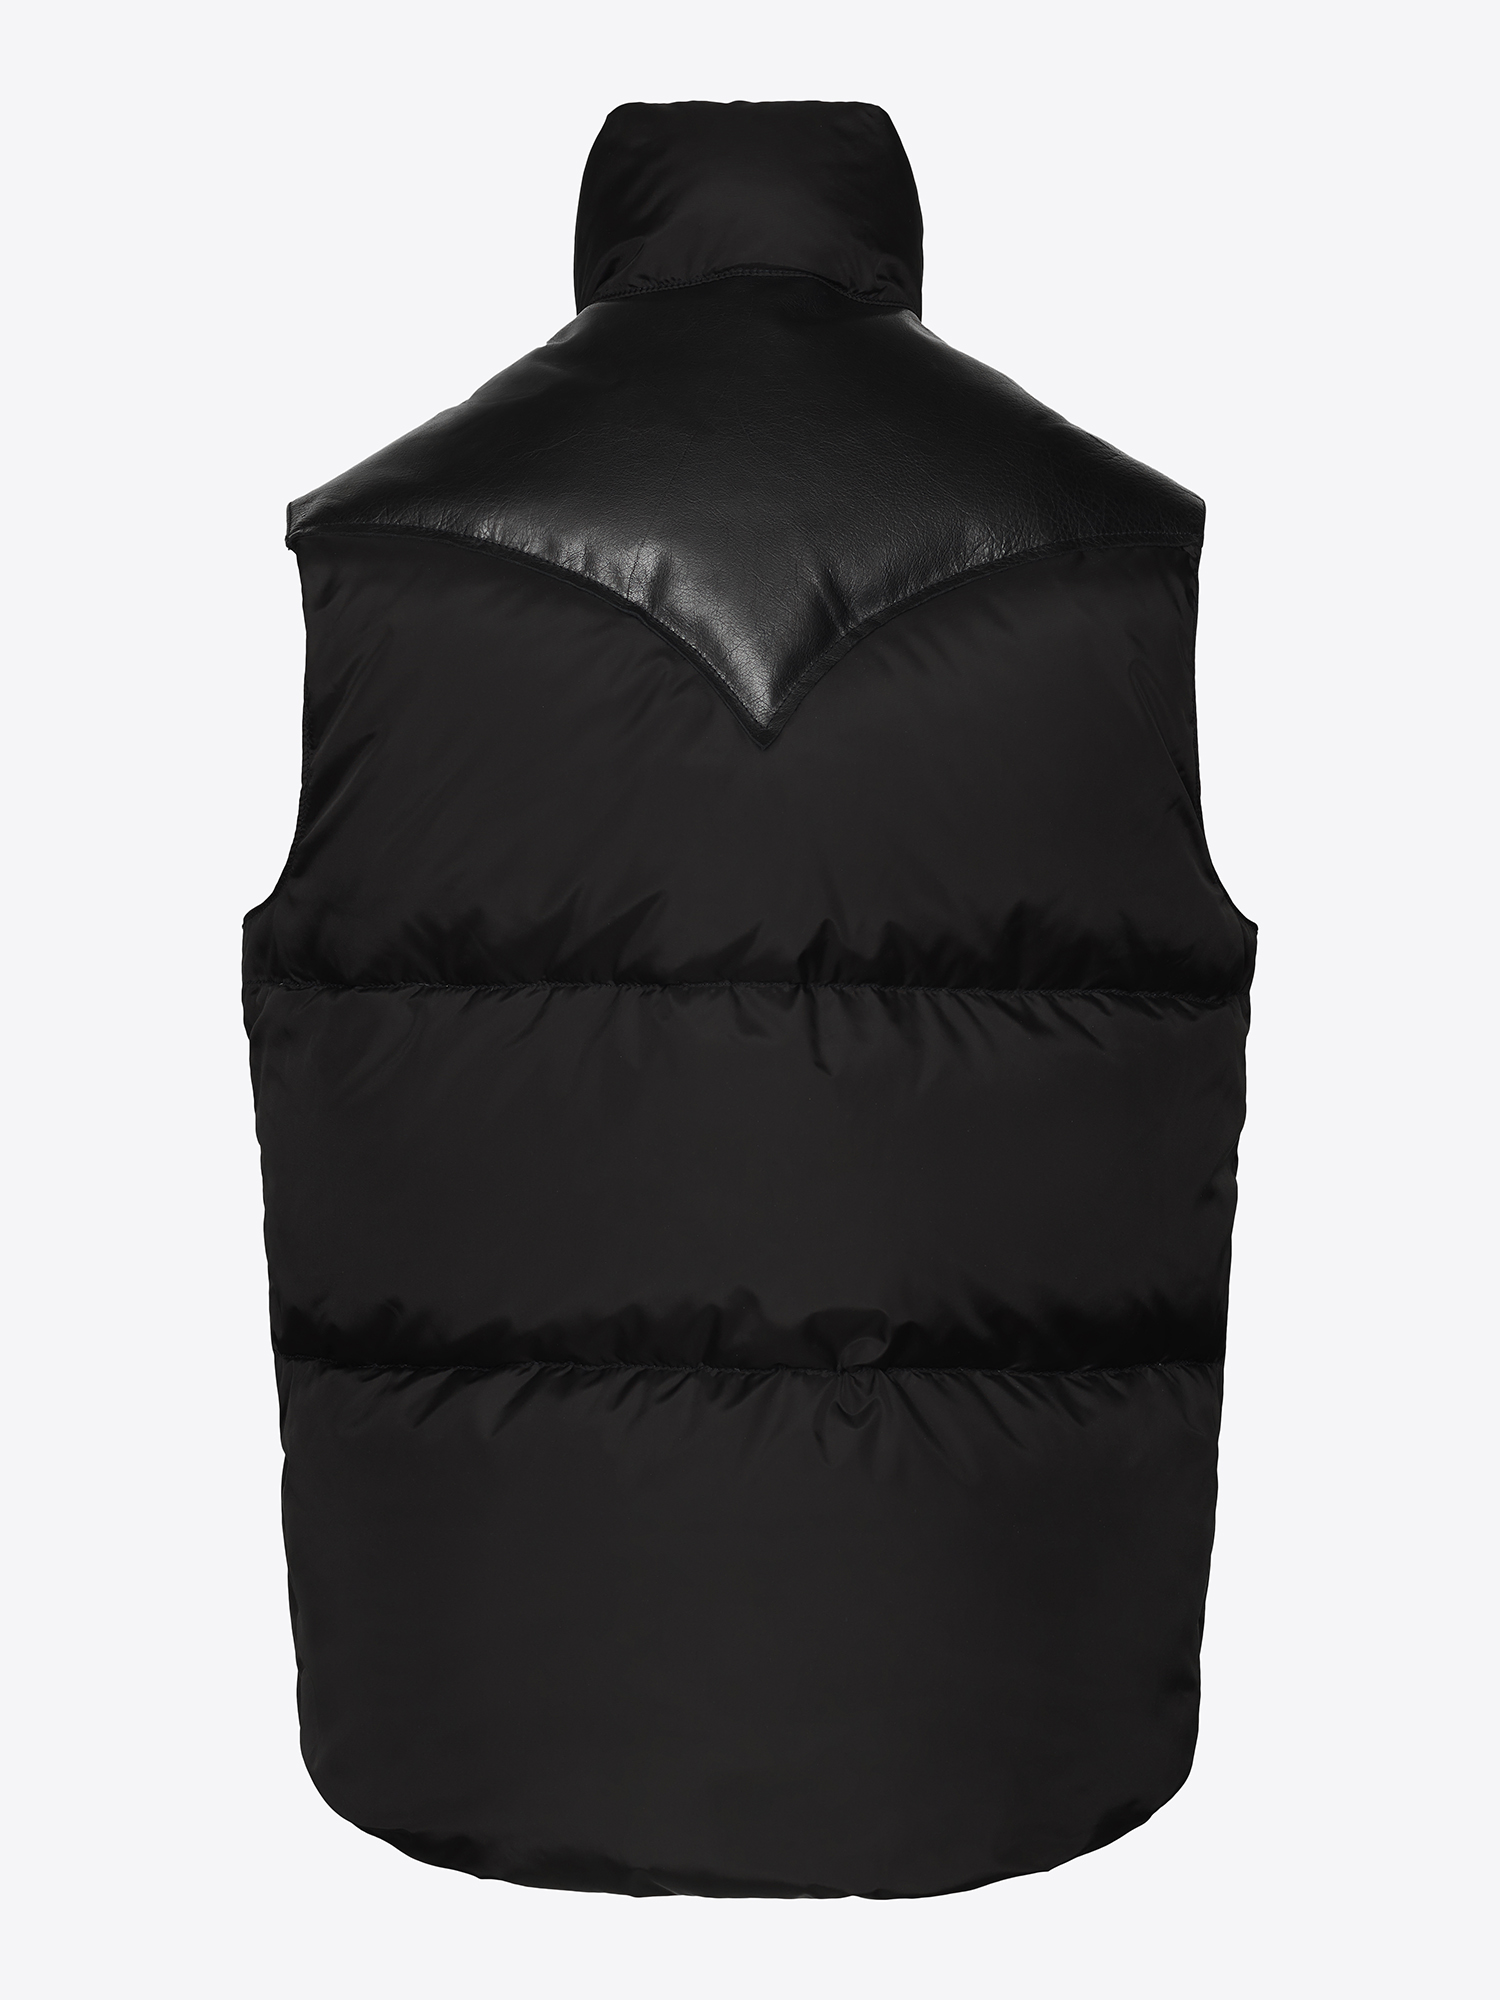 Western down vest with single-piece leather yoke